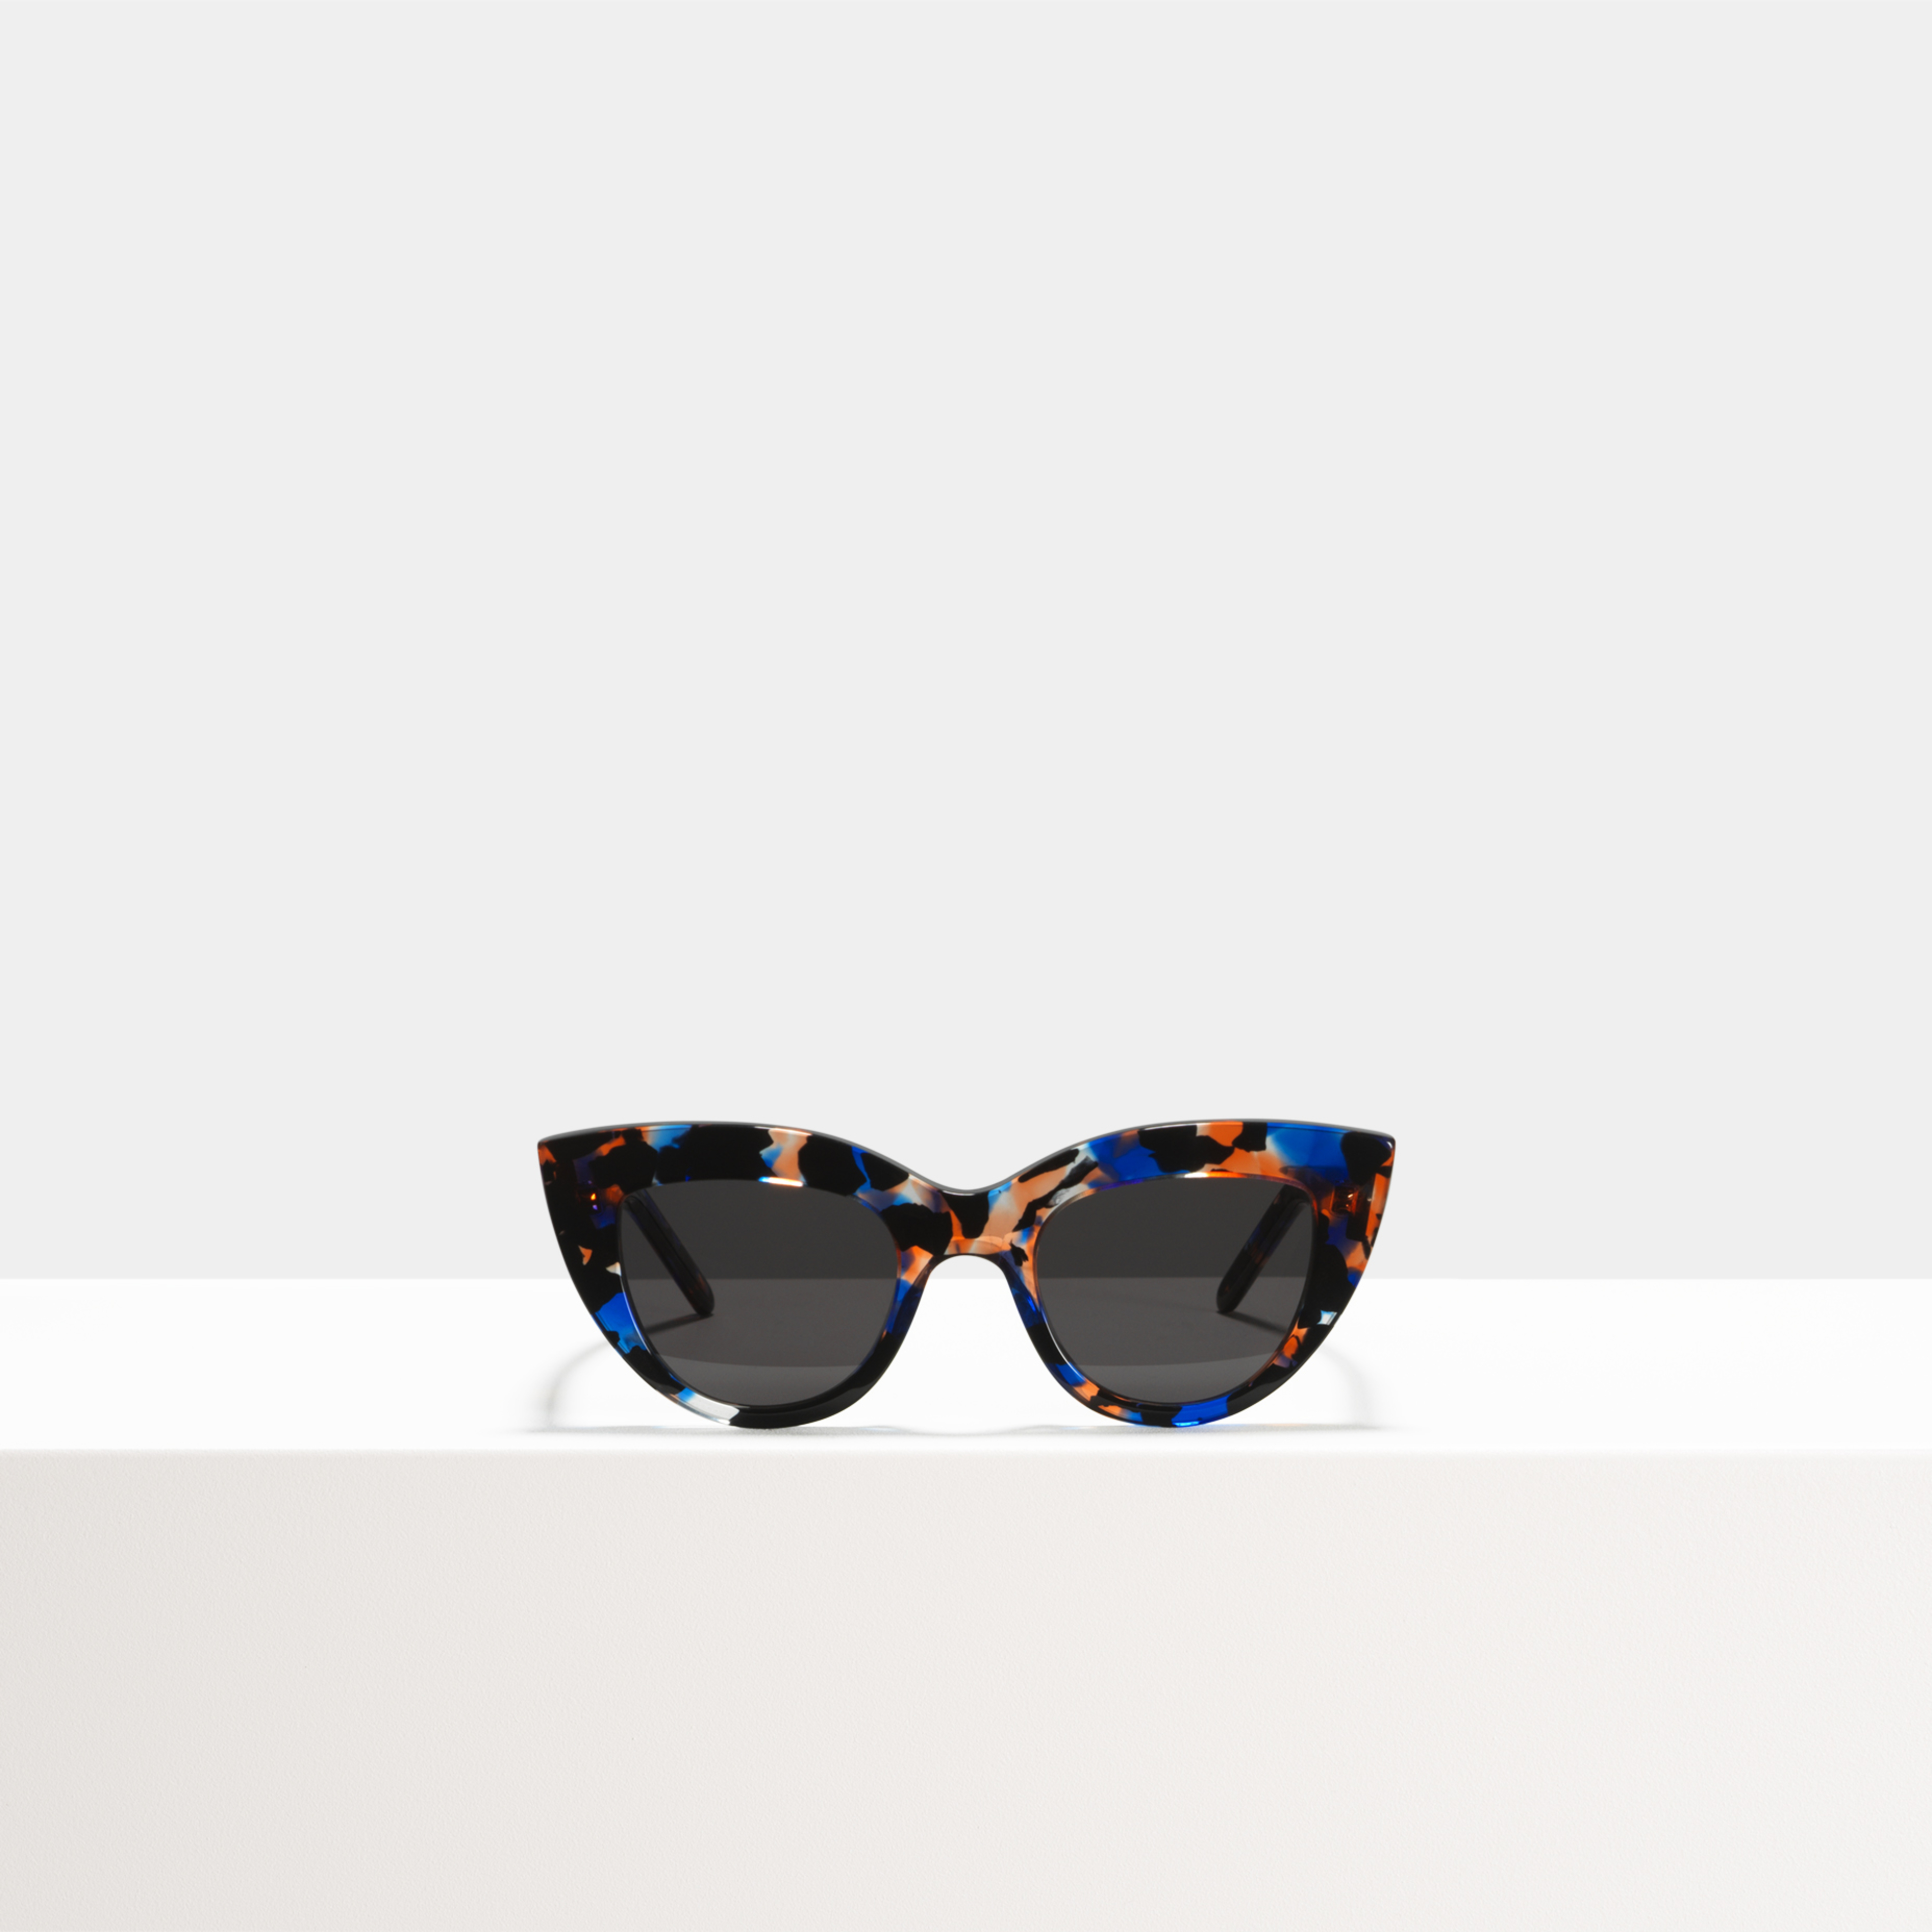 Ace & Tate Sonnenbrillen |  Acetat in Schwarz, Blau, Orange